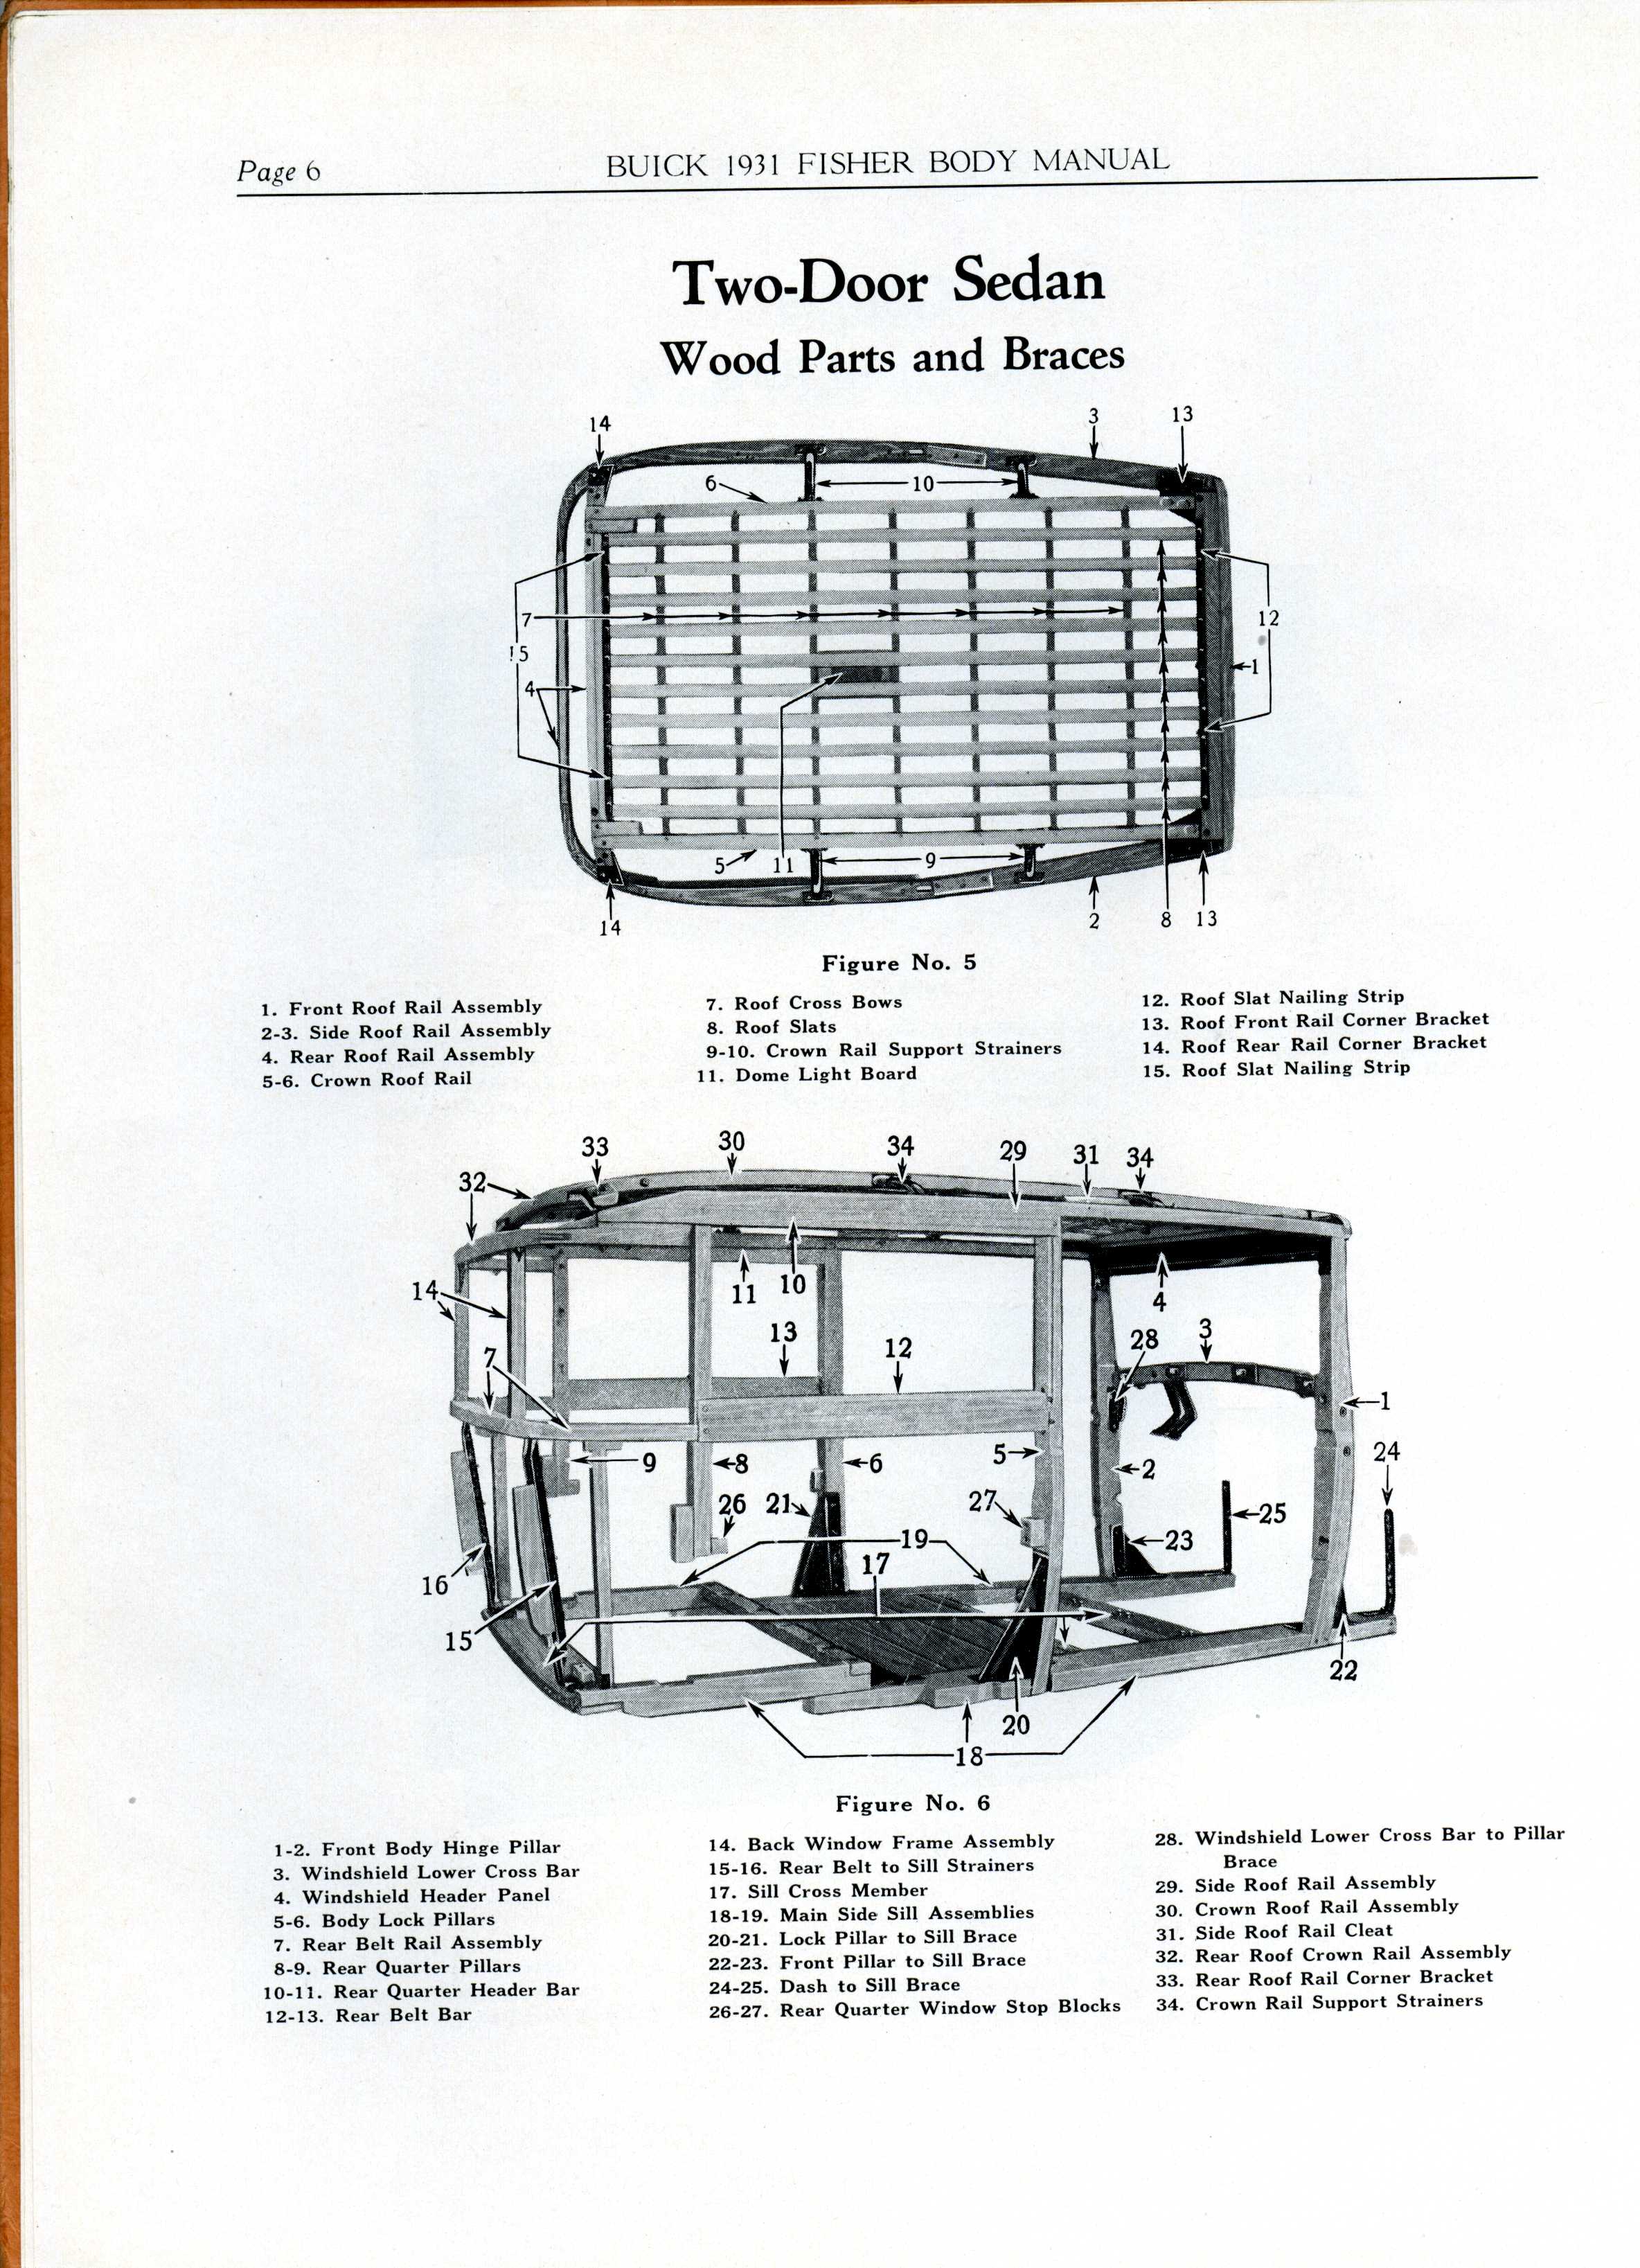 1931 Buick Fisher Body Manual